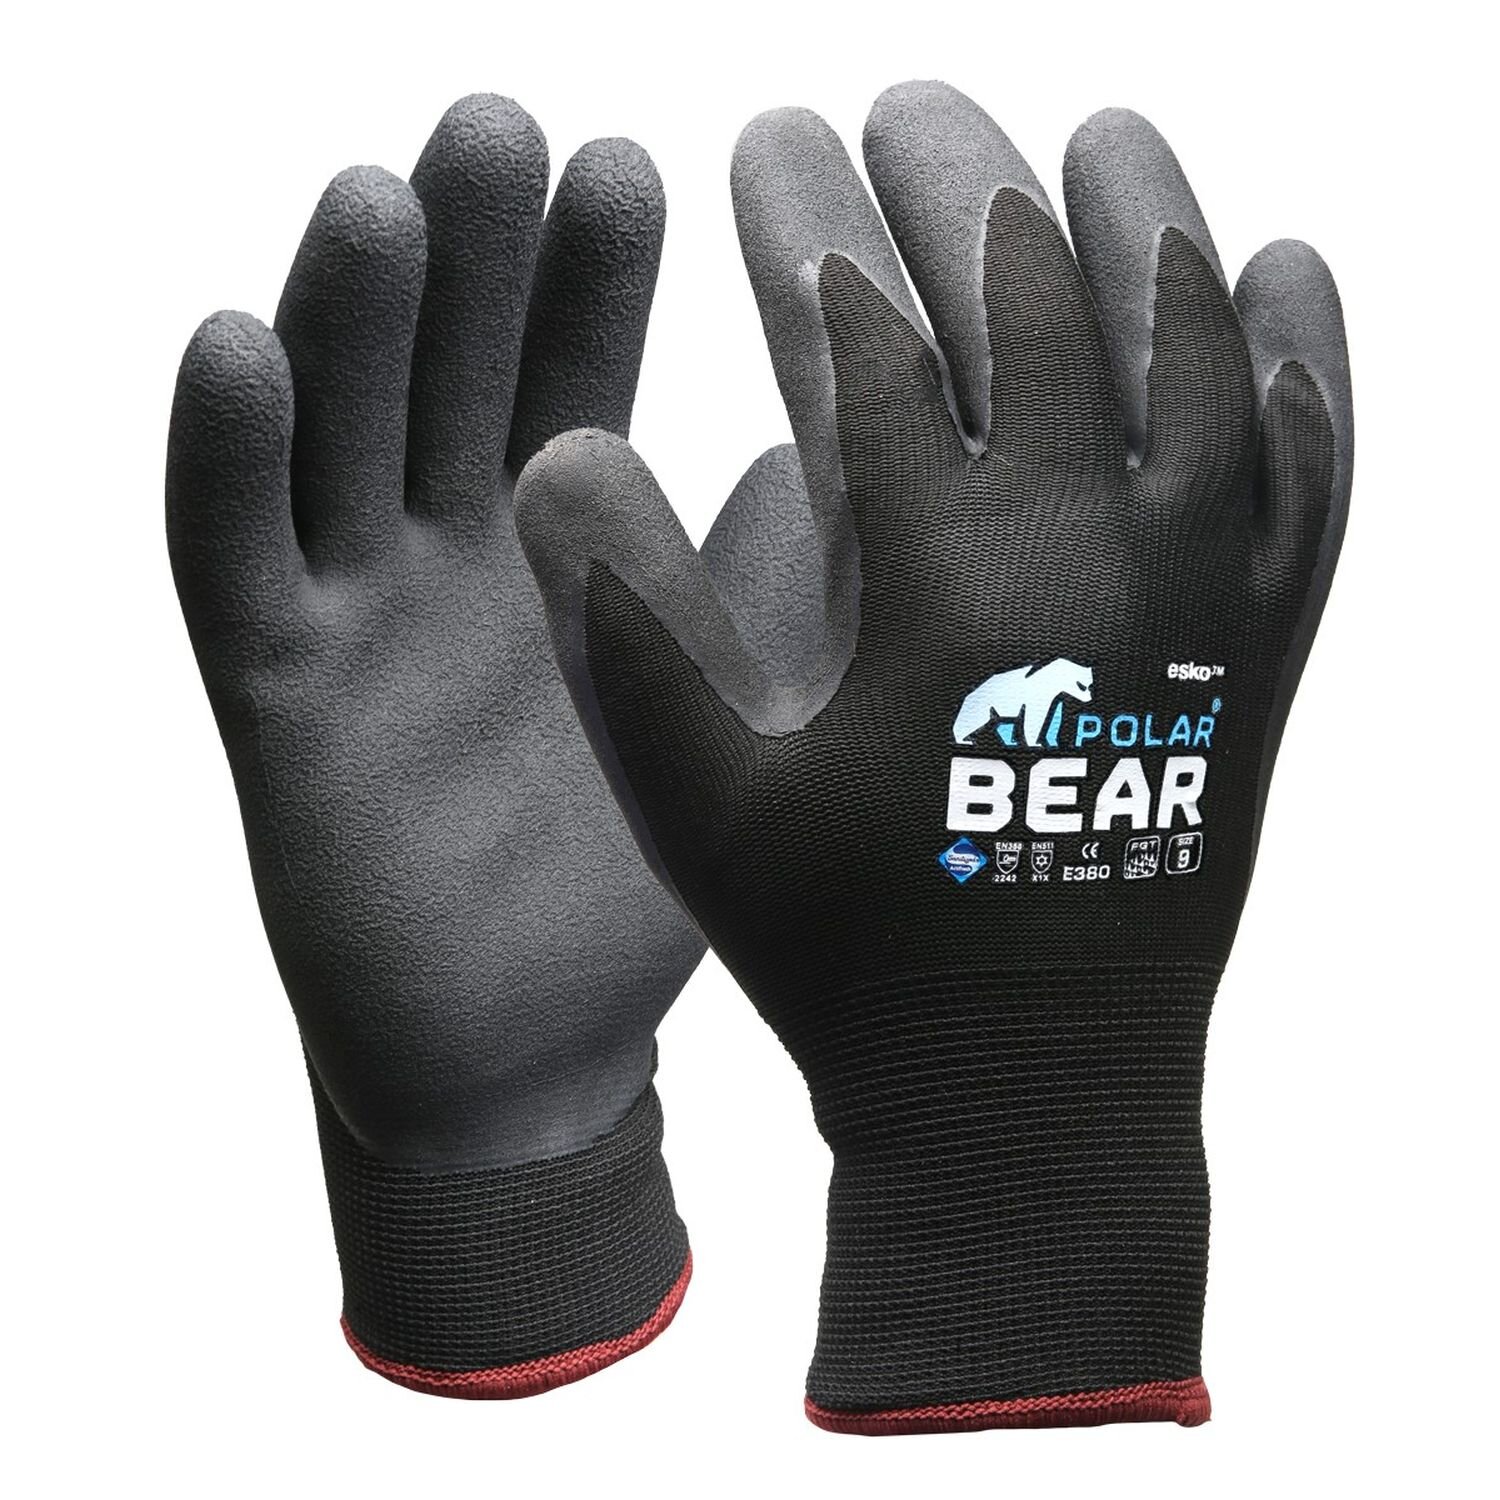 Polar Bear Thermo Winter Gloves Grey/Black